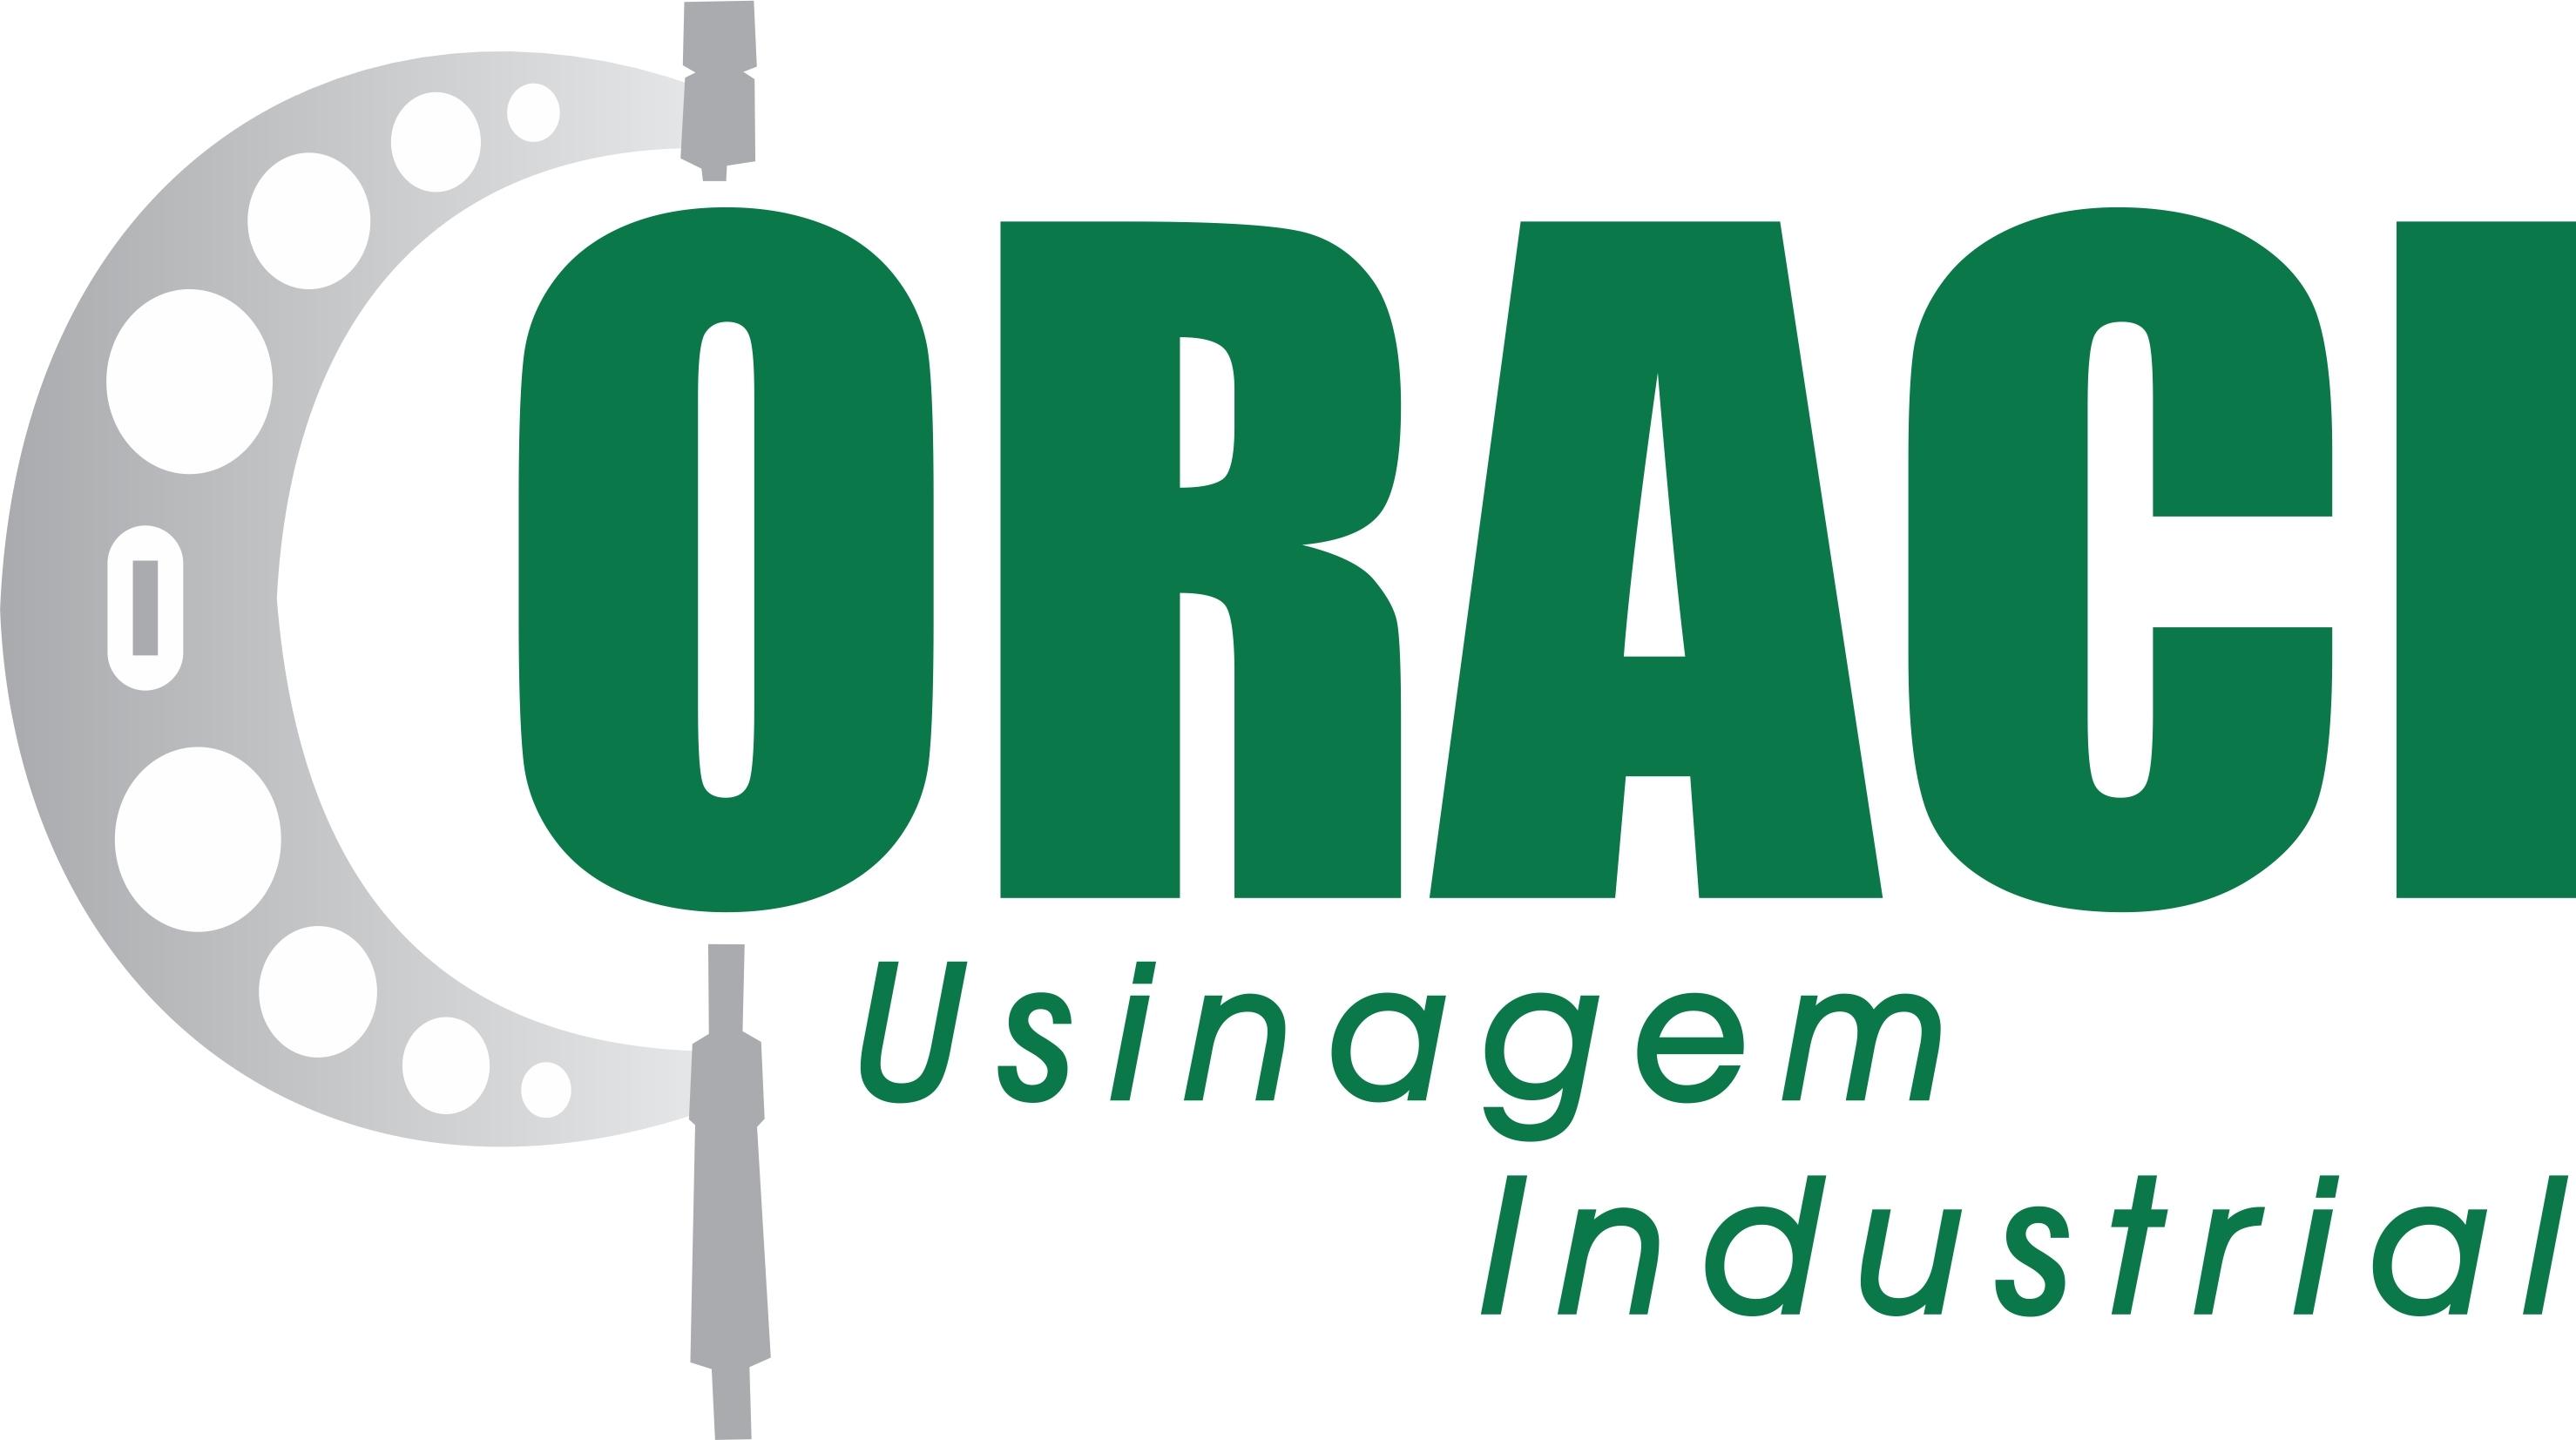 Coraci Usinagem Industrial logo